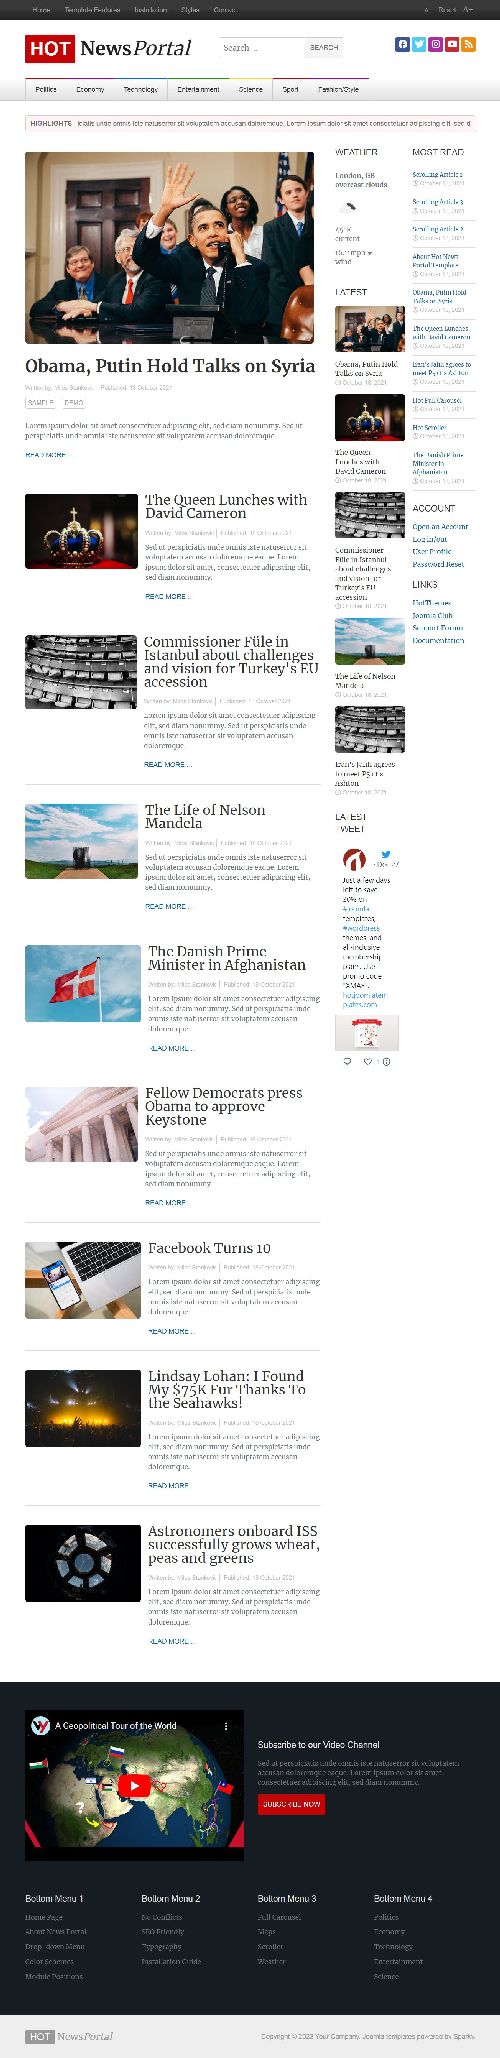 News Portal - Joomla 4 Template Built for News Portal Sites